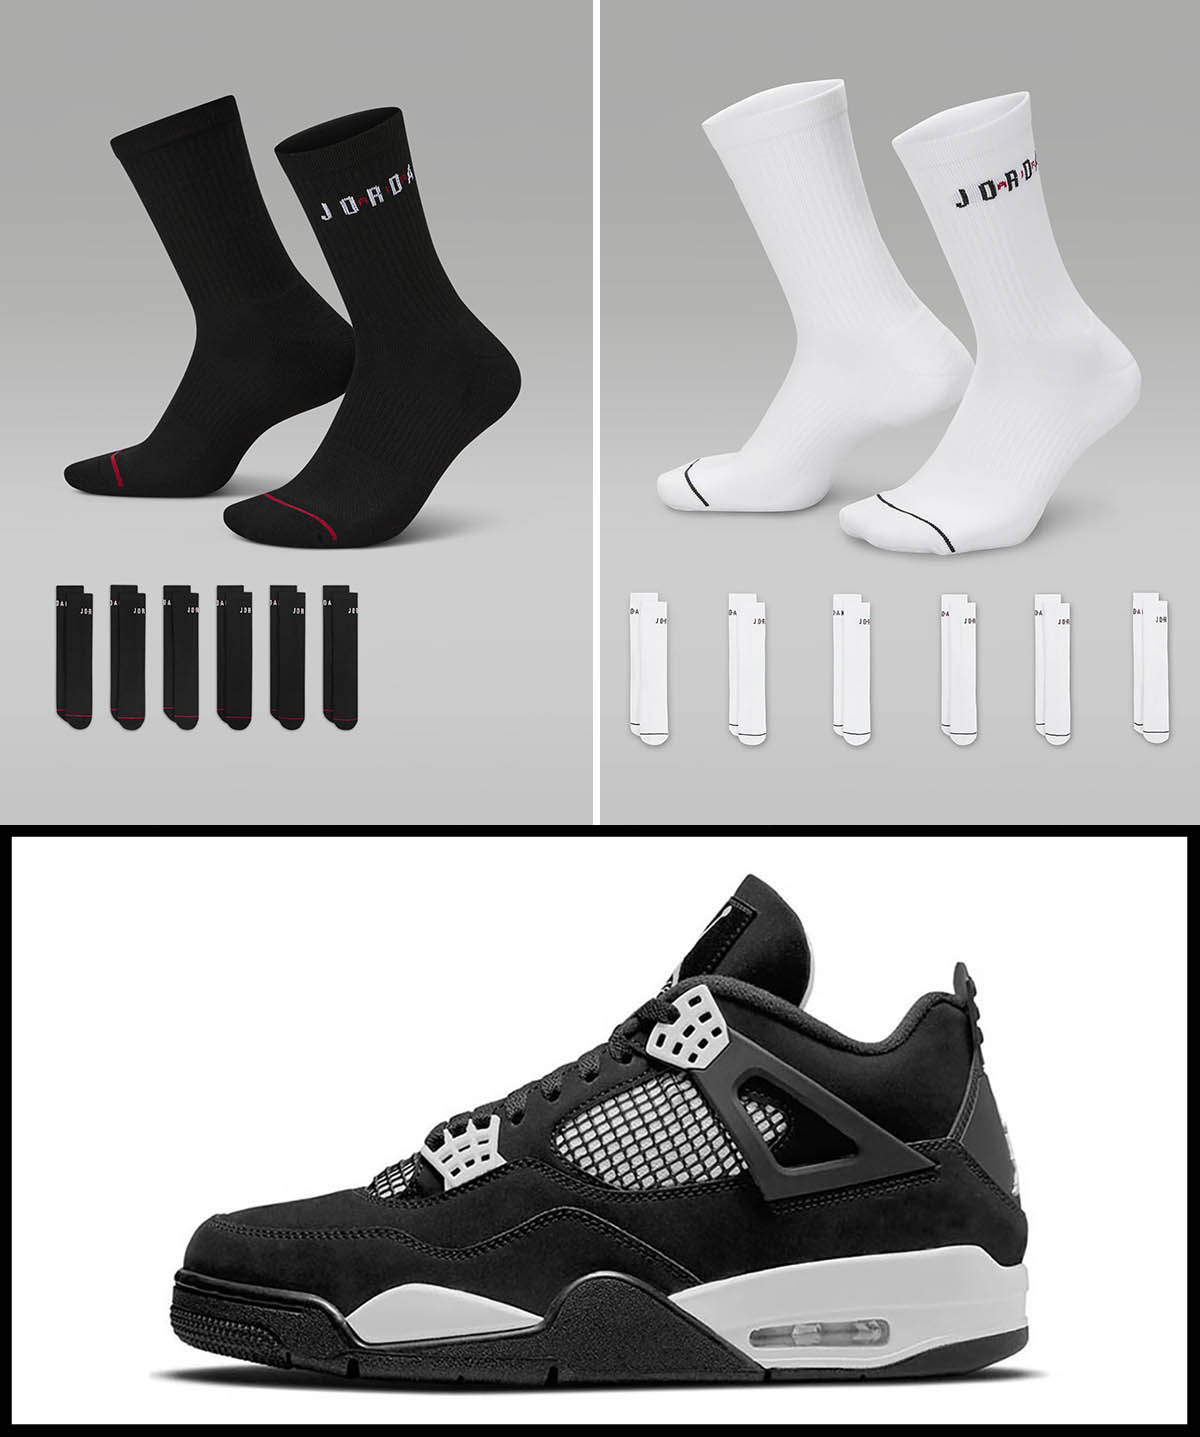 Air Jordan 4 White Thunder Socks